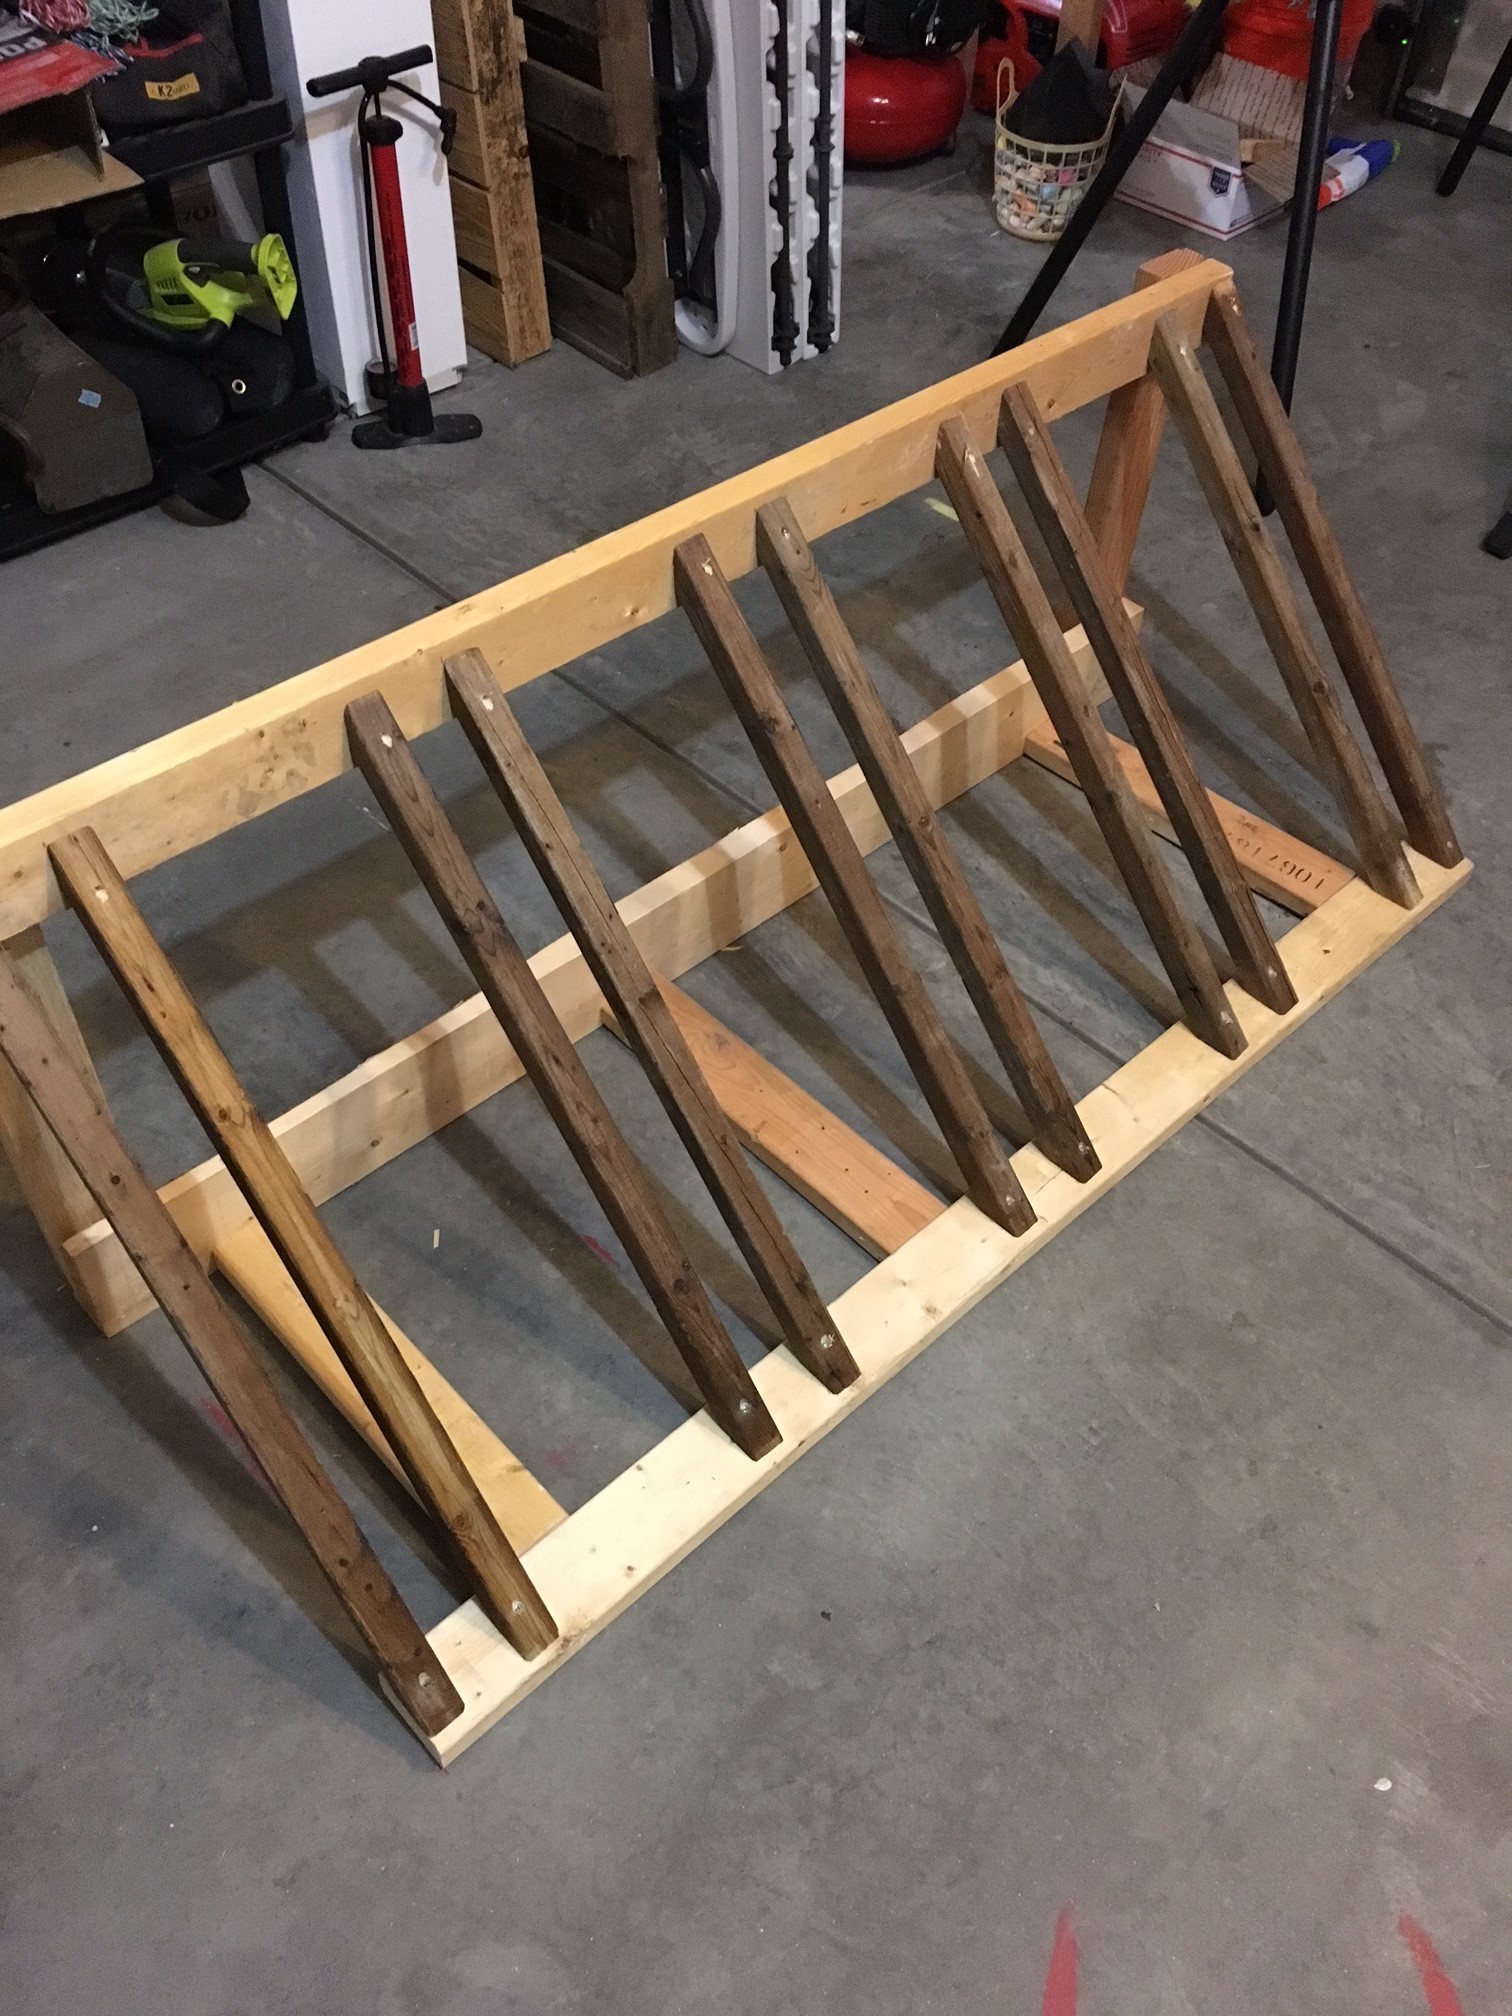 wooden bike shelf